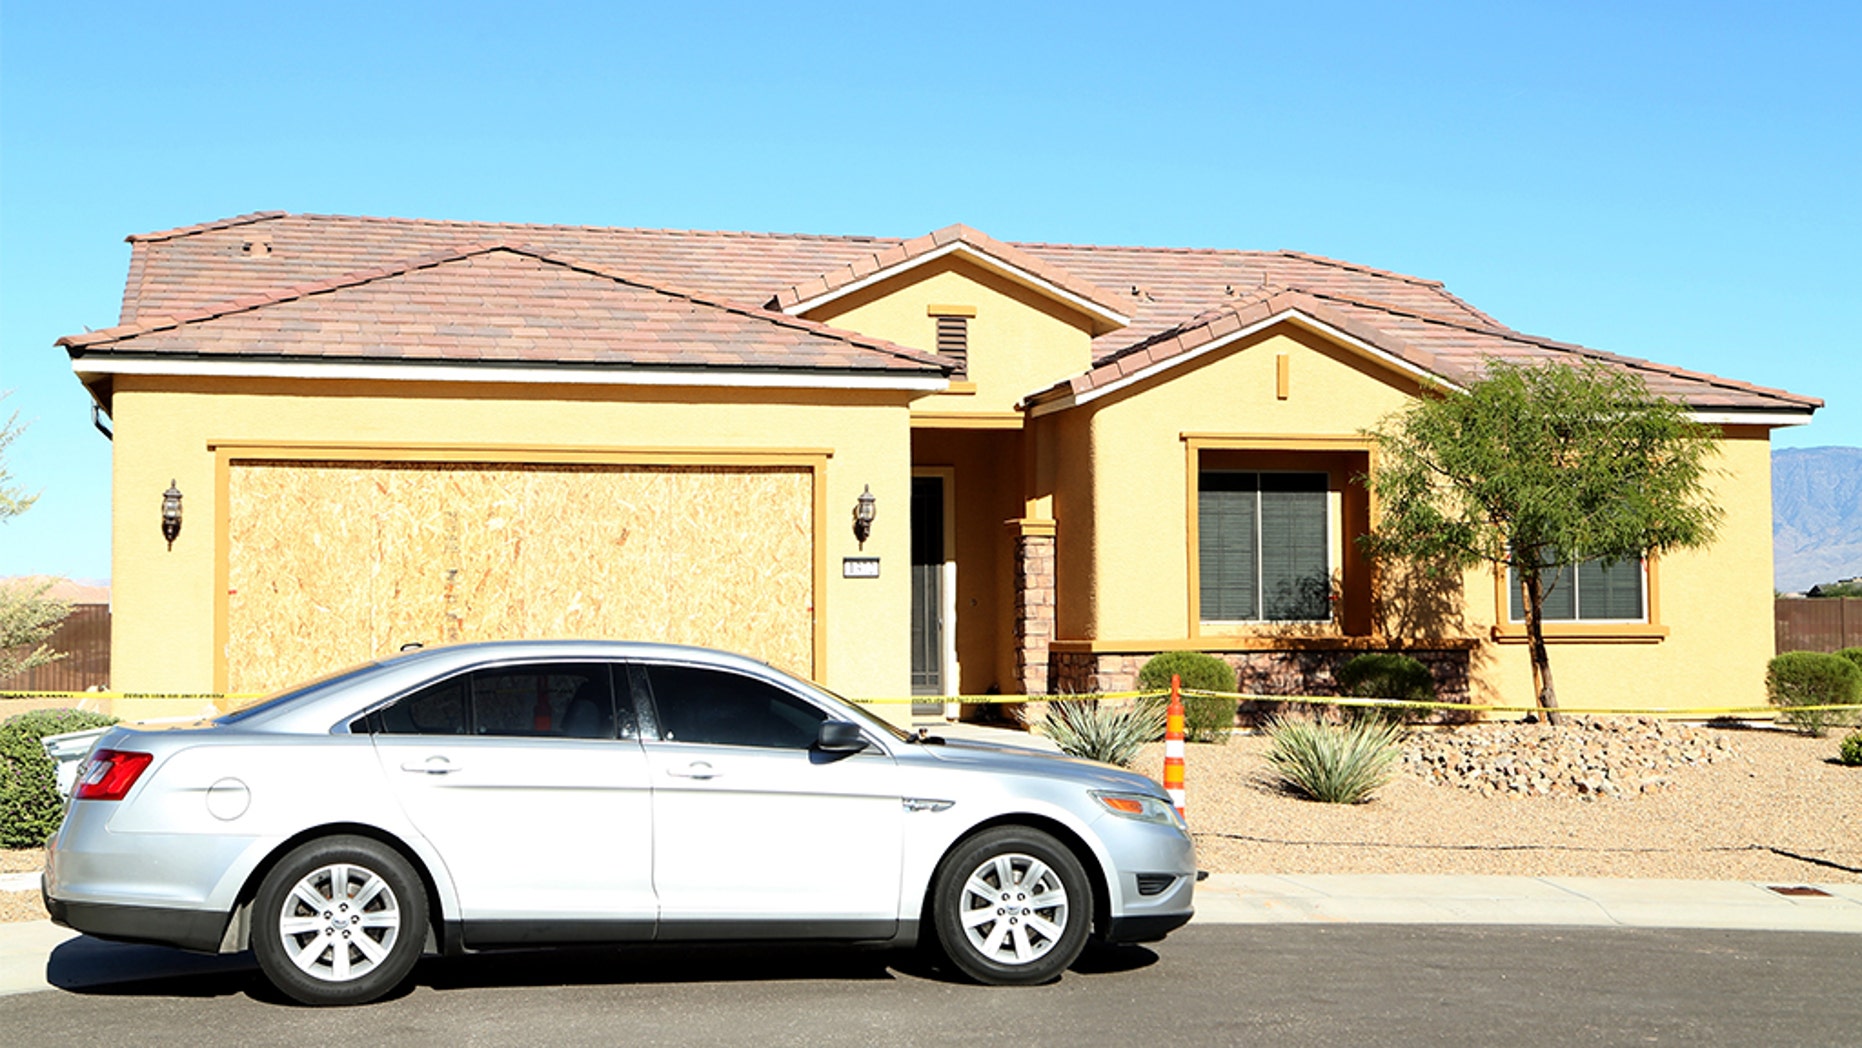 Home of gunman in Las Vegas massacre sells for $425G